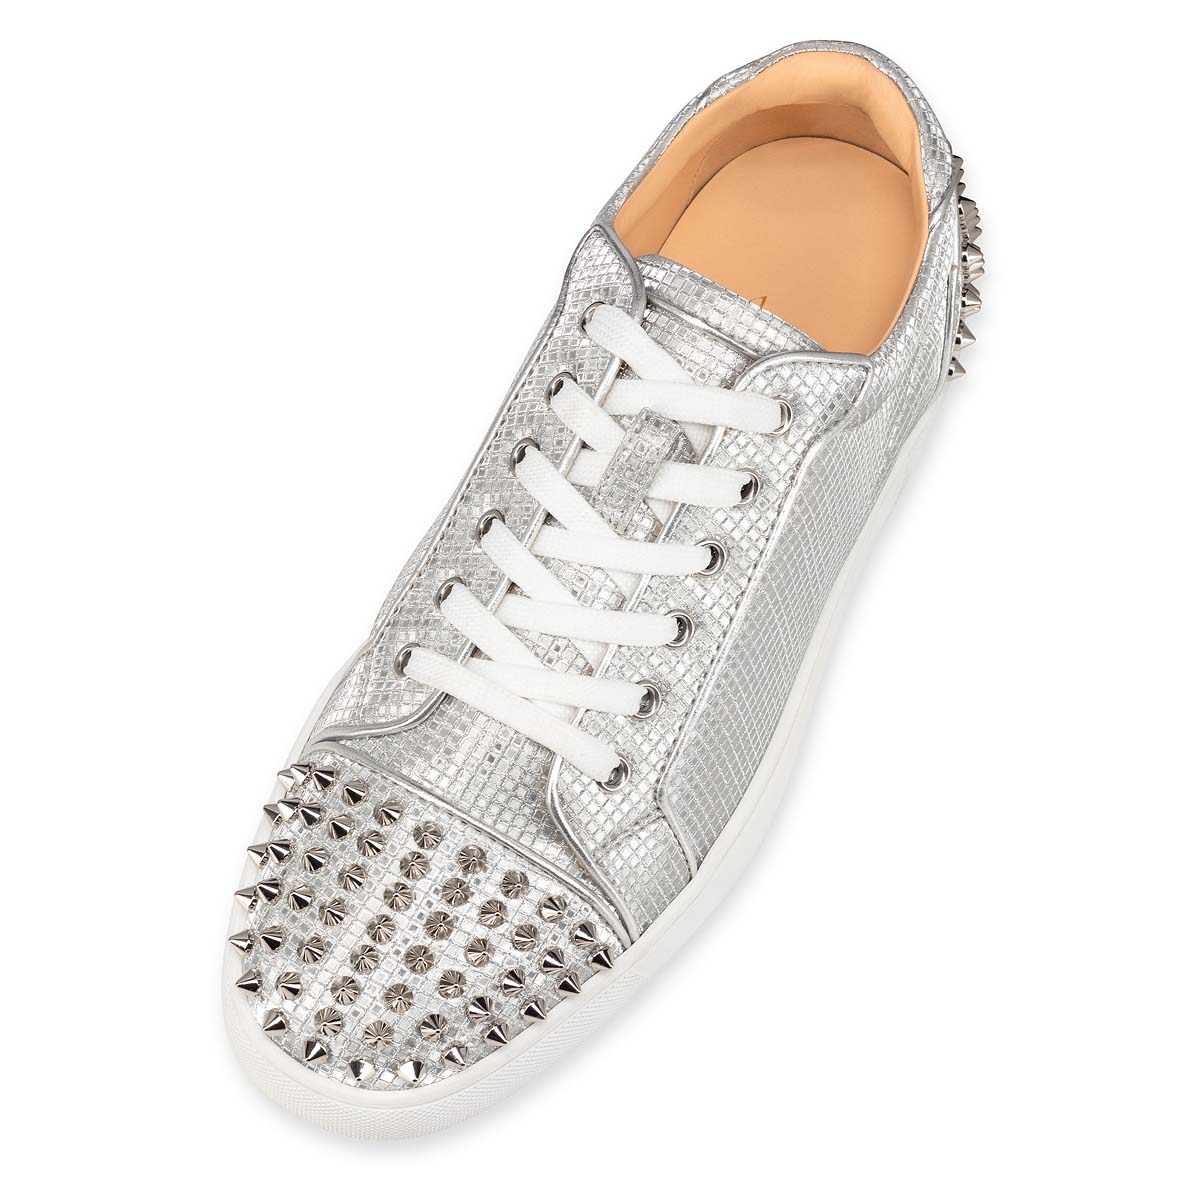 Seavaste 2 Orlato Silver Fabric - Shoes - Men - Christian Louboutin